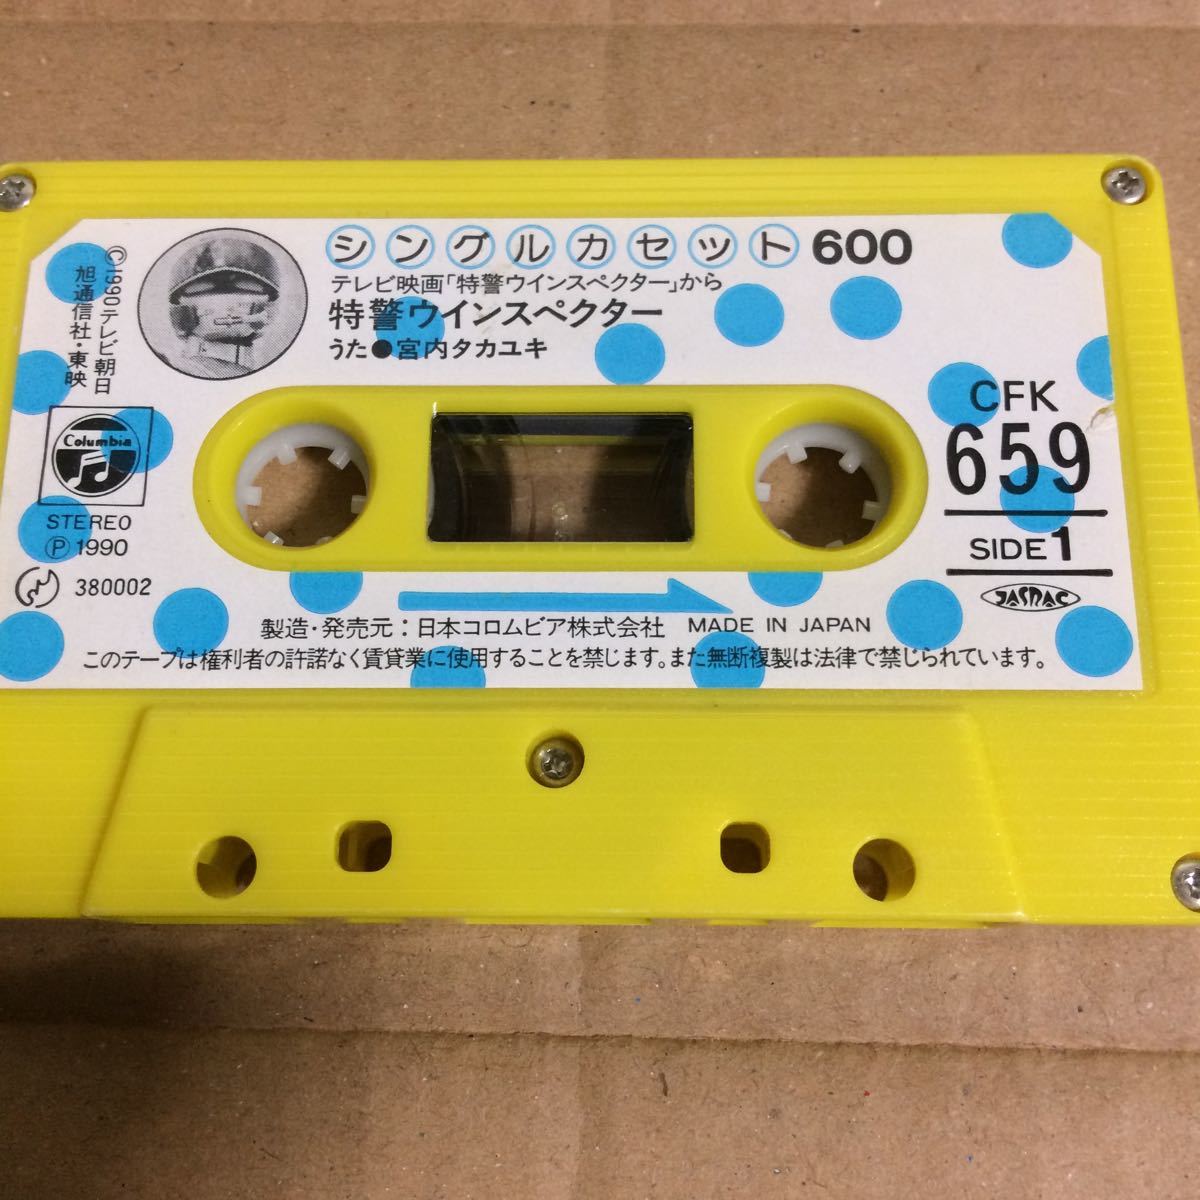 C0121) одиночный кассета 600 Tokkei Winspector 